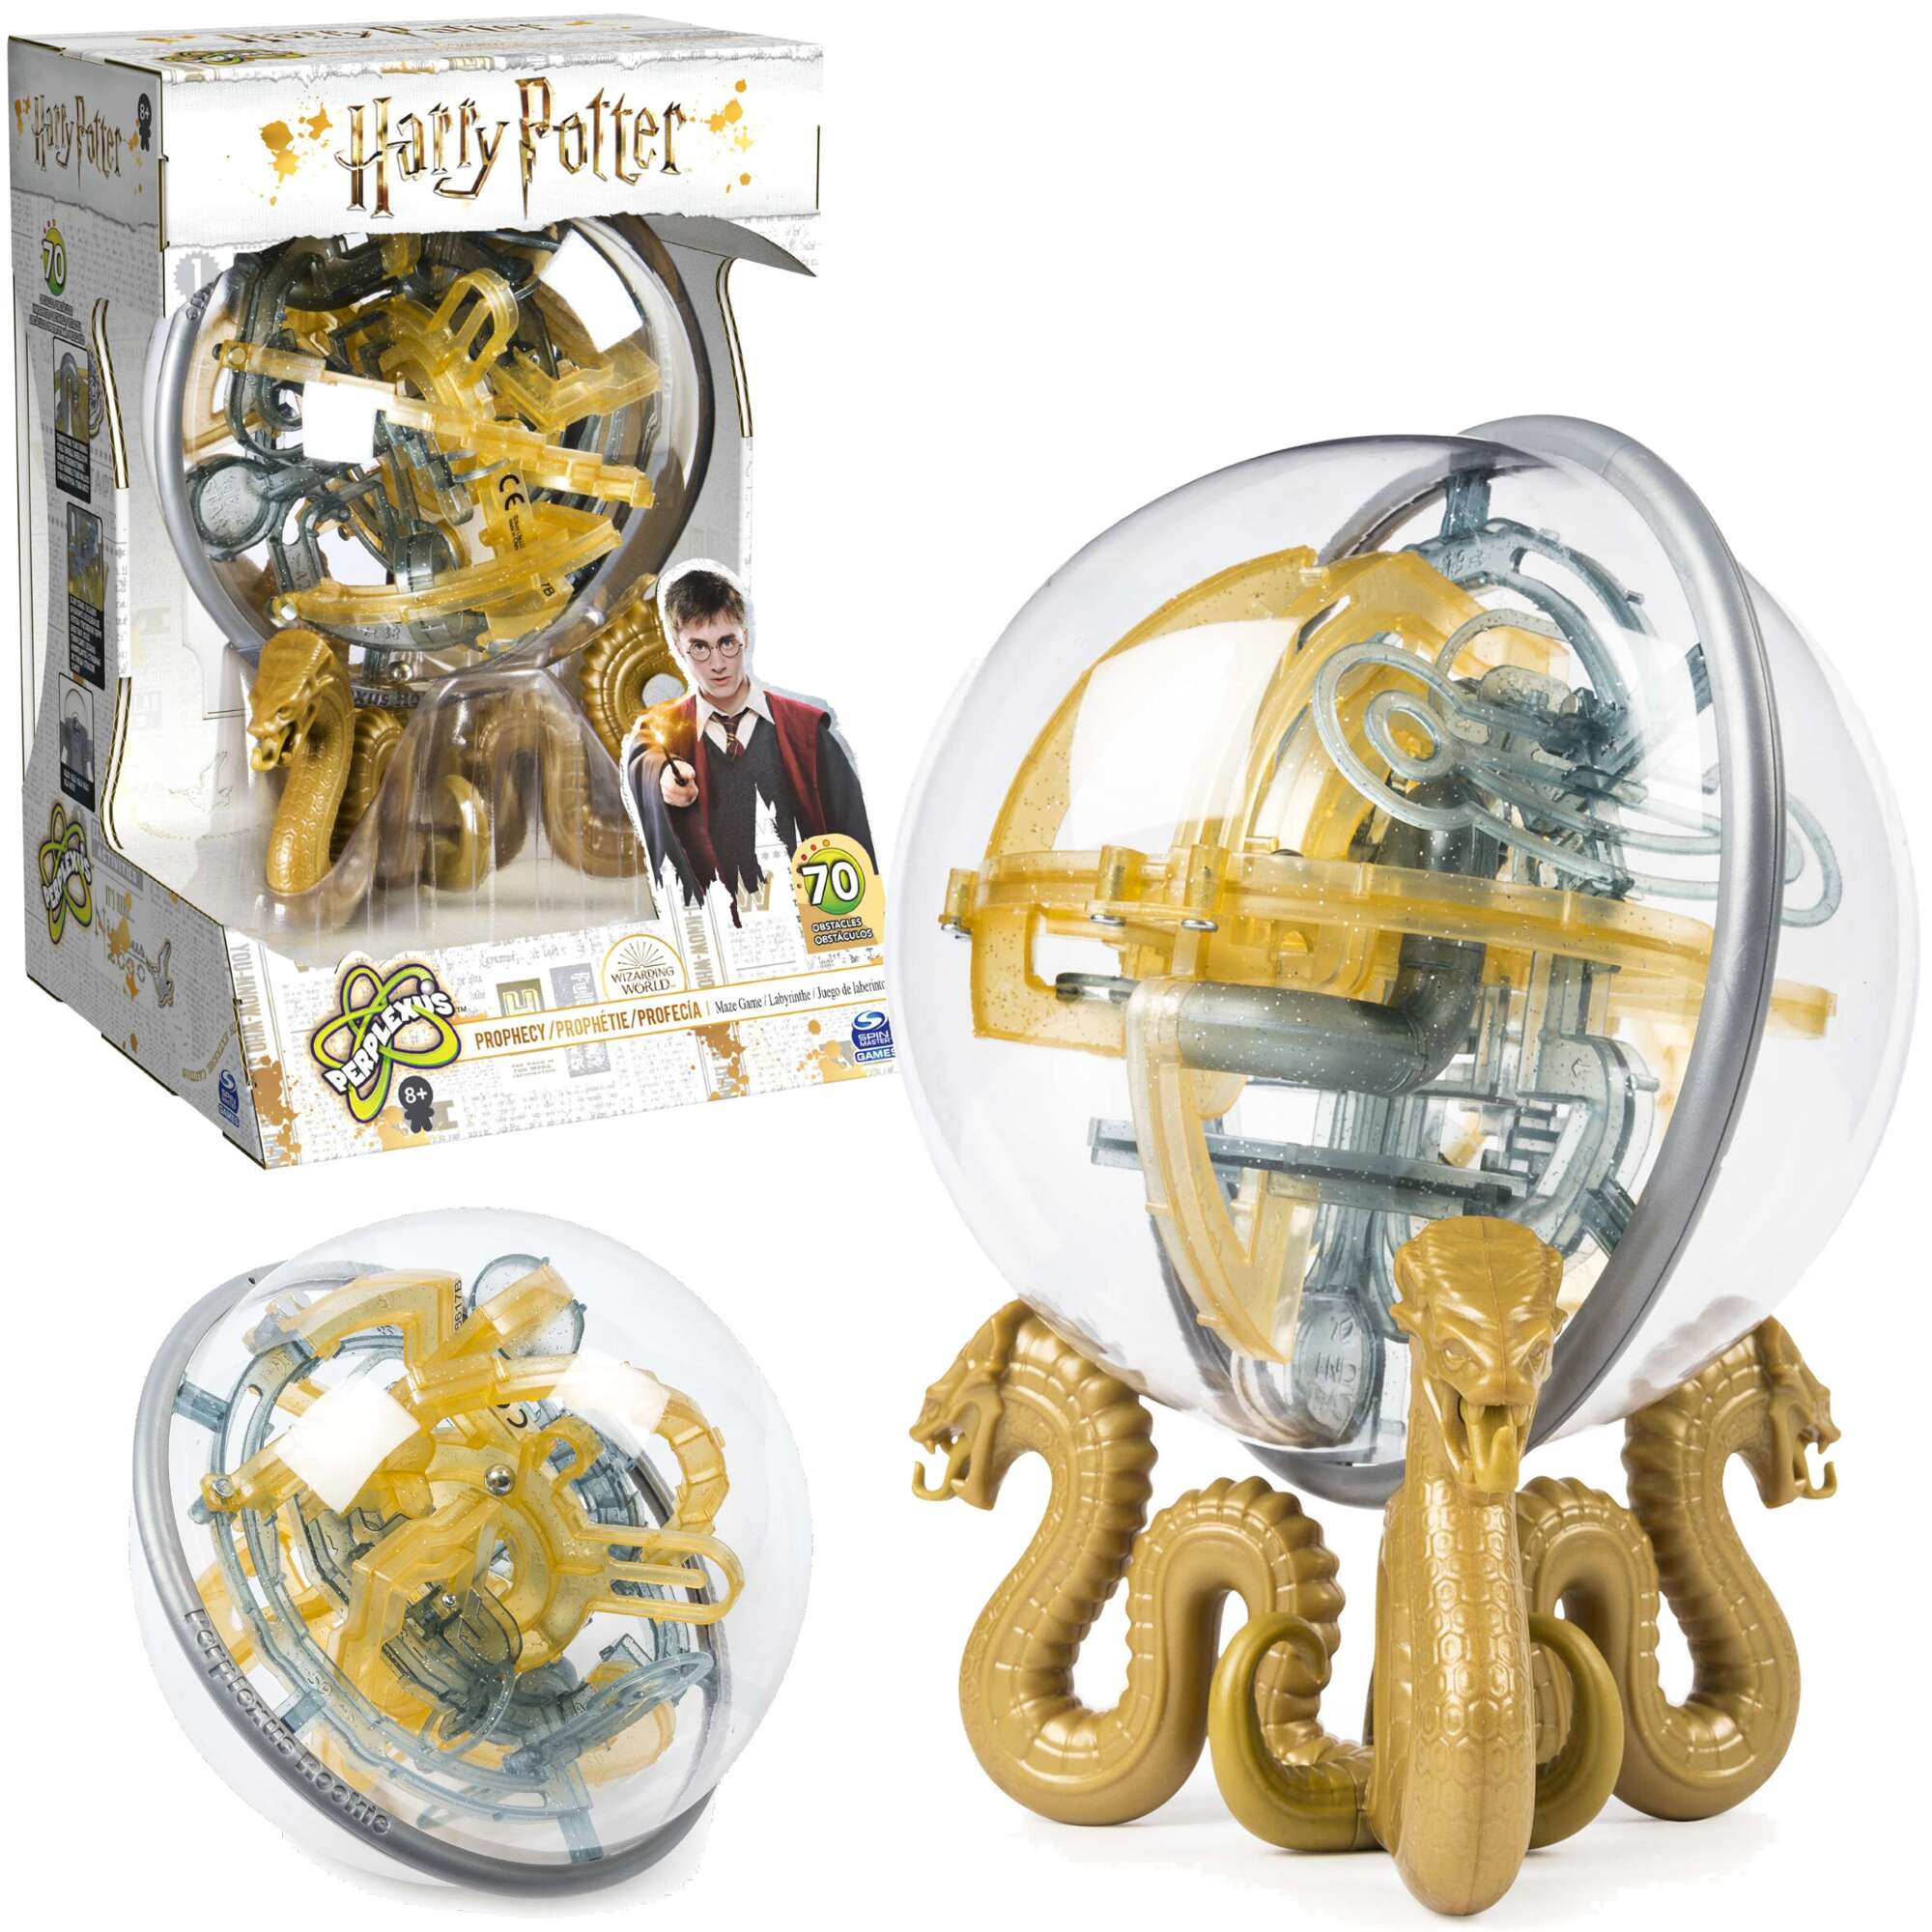 Kula Perplexus Harry Potter Labirynt kulkowy 3D gra zrcznociowa